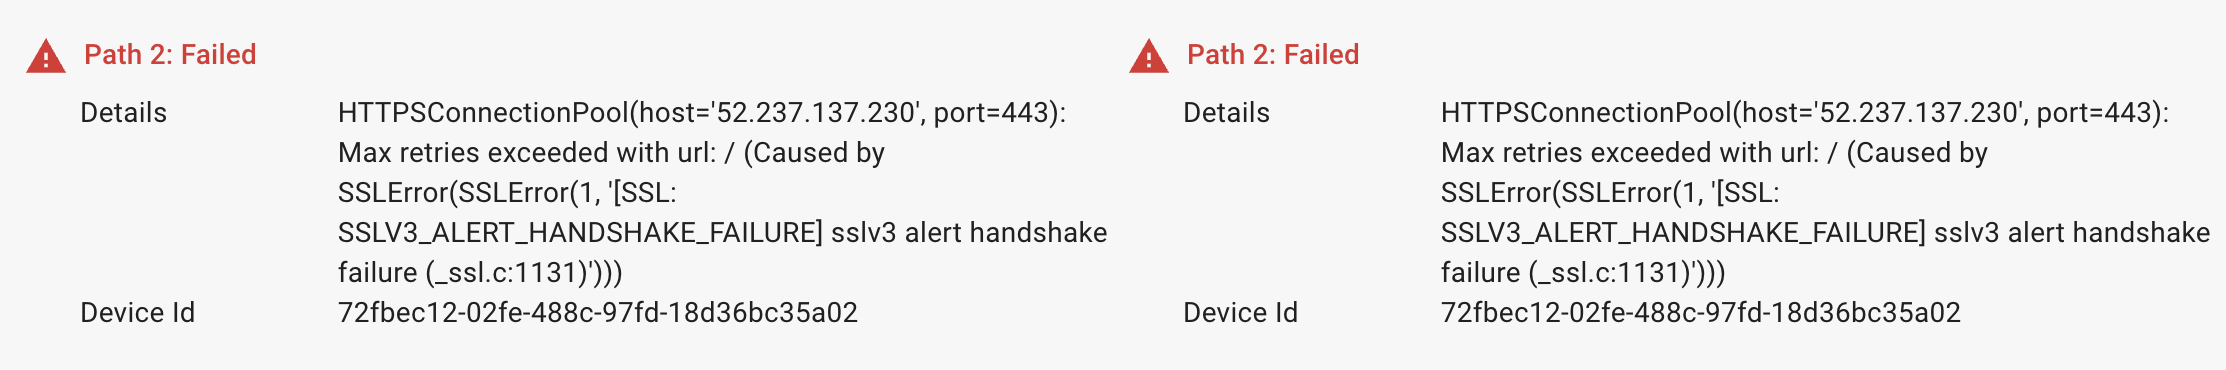 SSLV3_Alert_Handshake_Failure.png